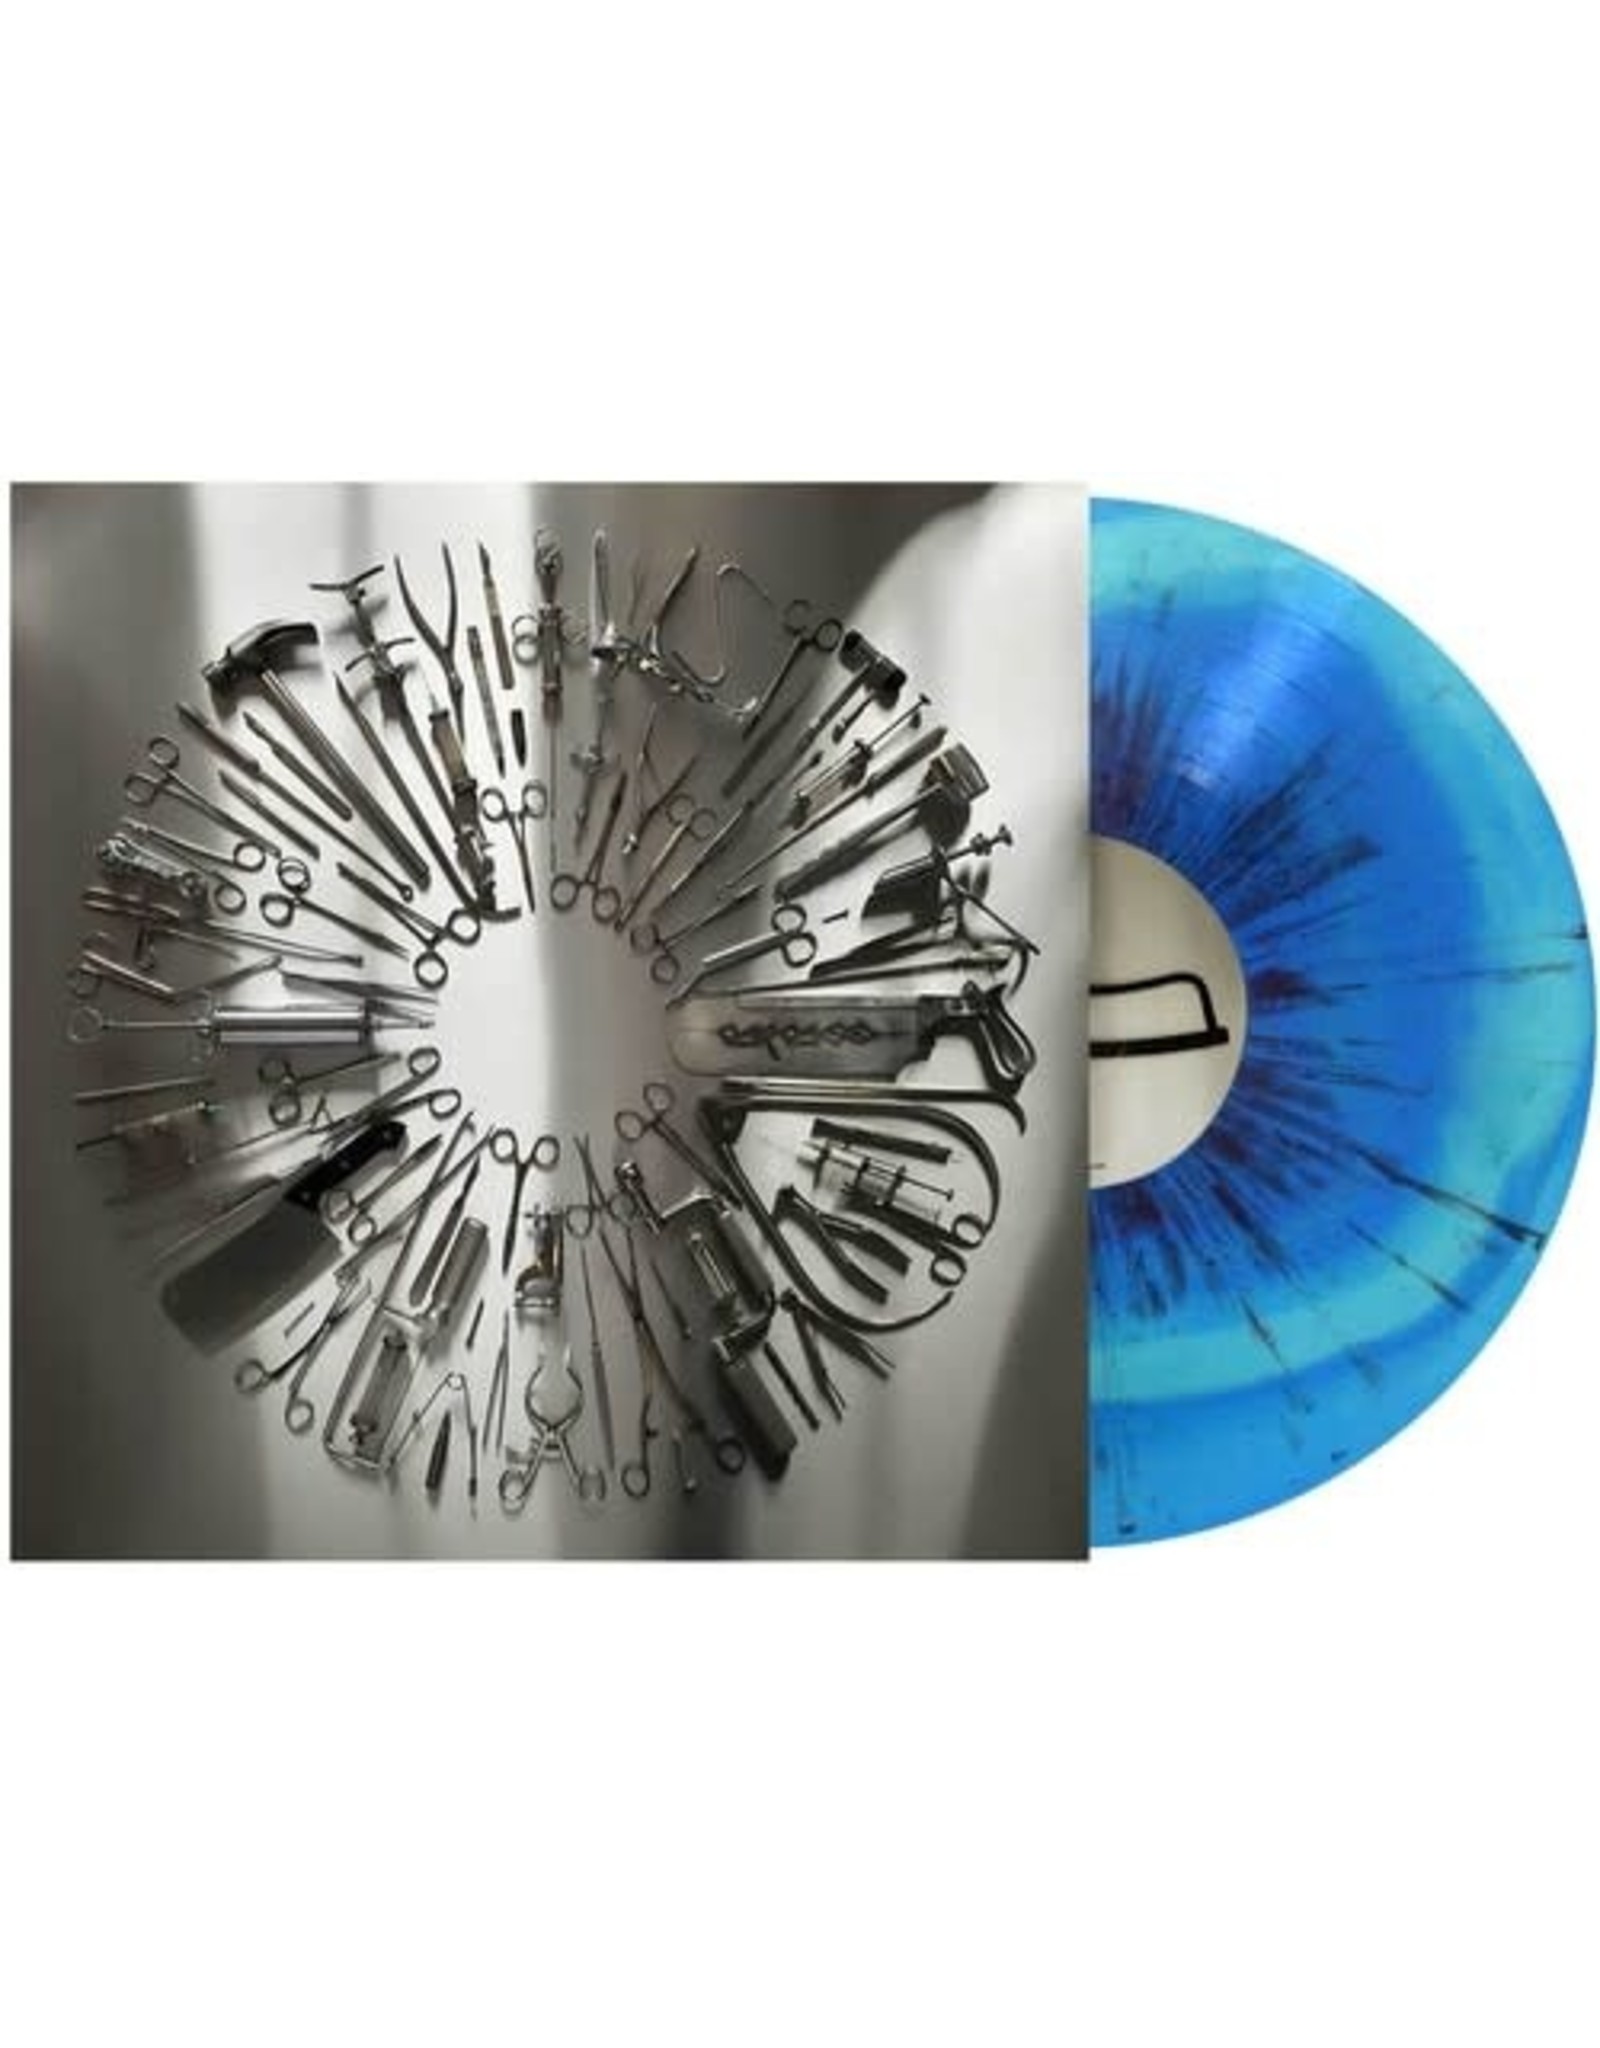 New Vinyl Carcass - Surgical Steel (Ltd. Swirl/Splatter) LP